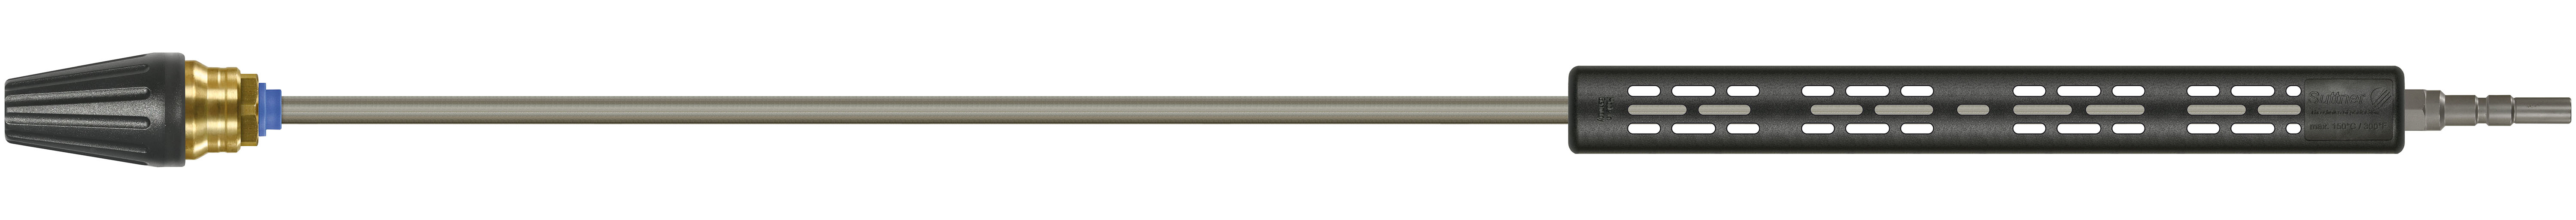 Rotabuse céramique avec lance 1000mm, 200-400 bar, Calibre 035